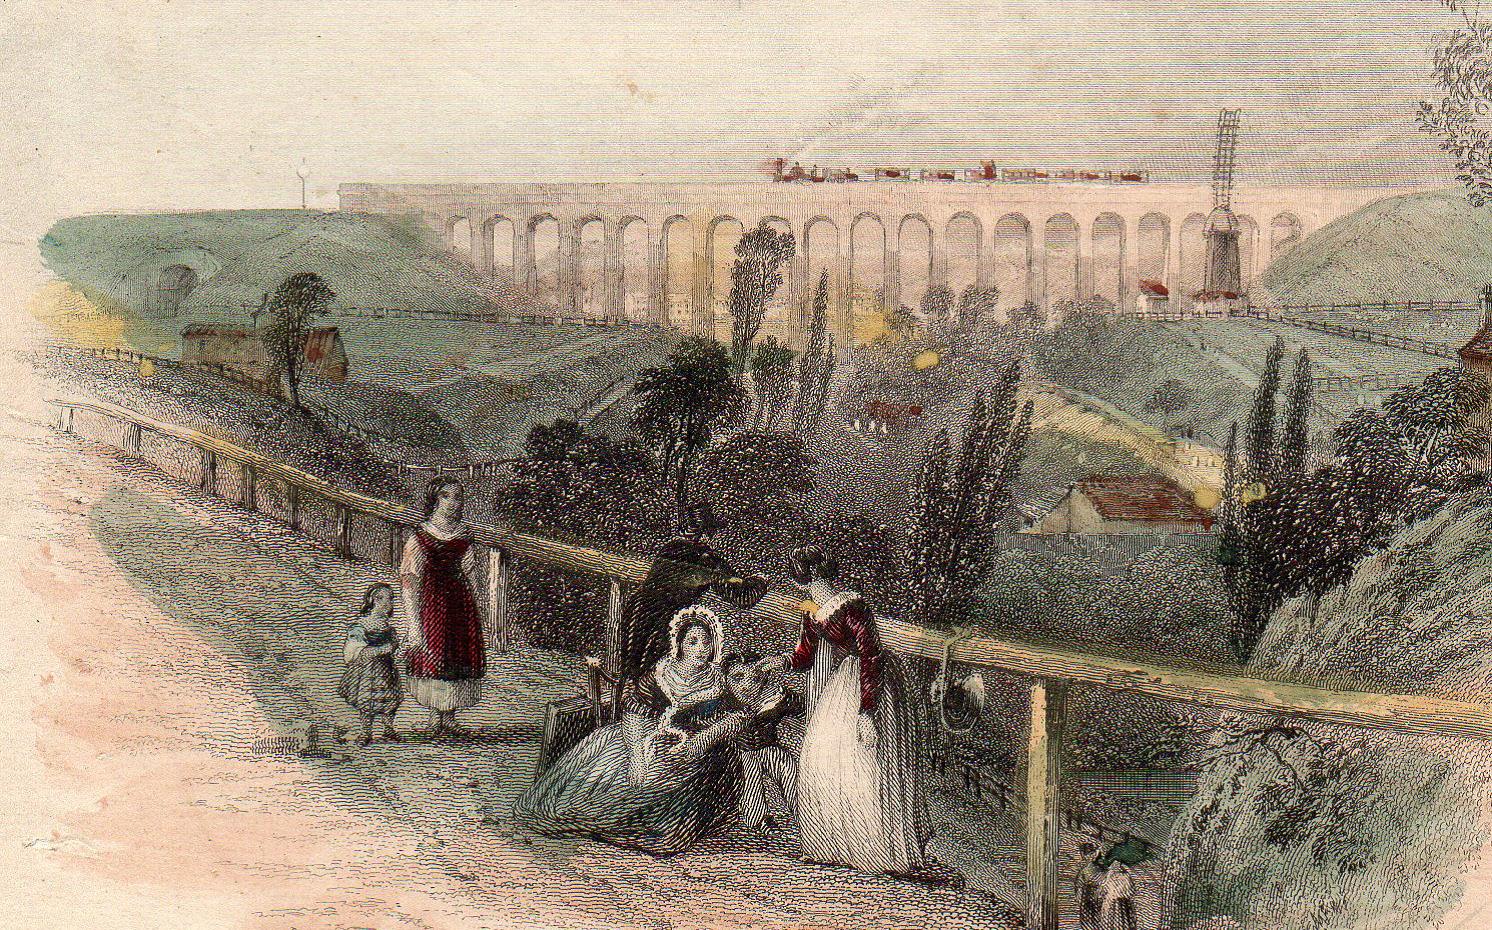 The fertile Foord Valley, Folkestone, 1844